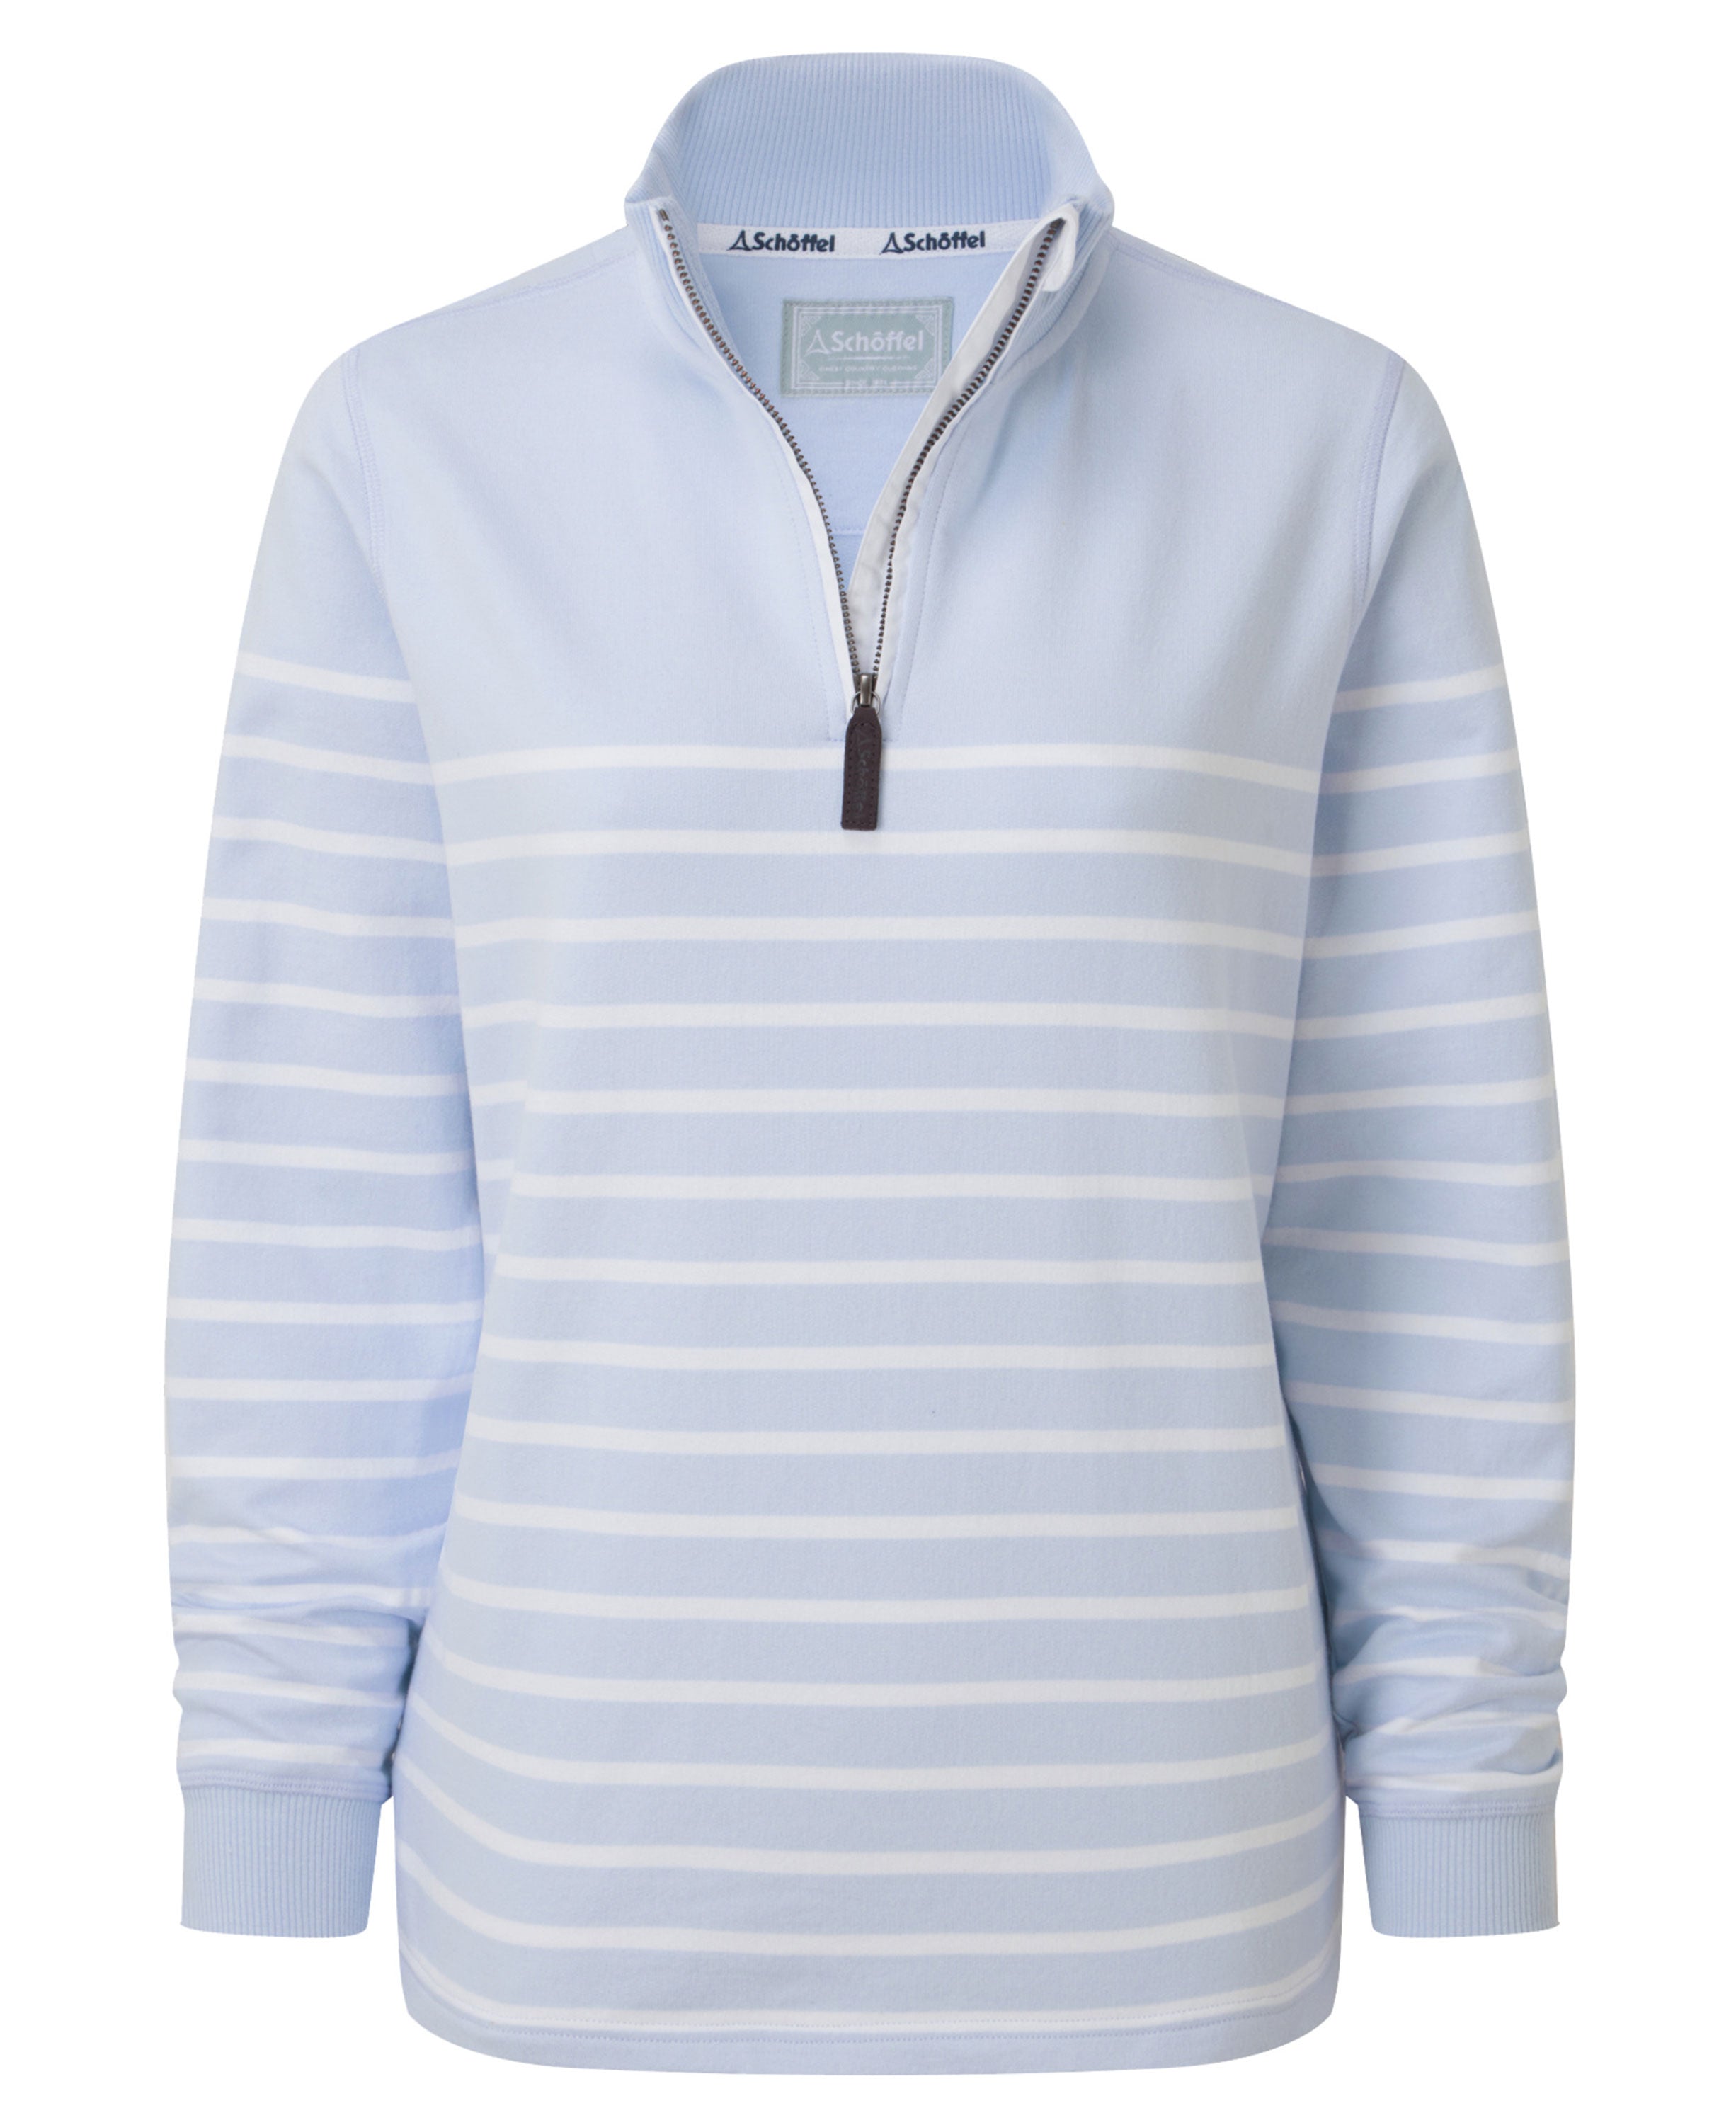 Hope Cove Sweatshirt - Pale Blue Stripe